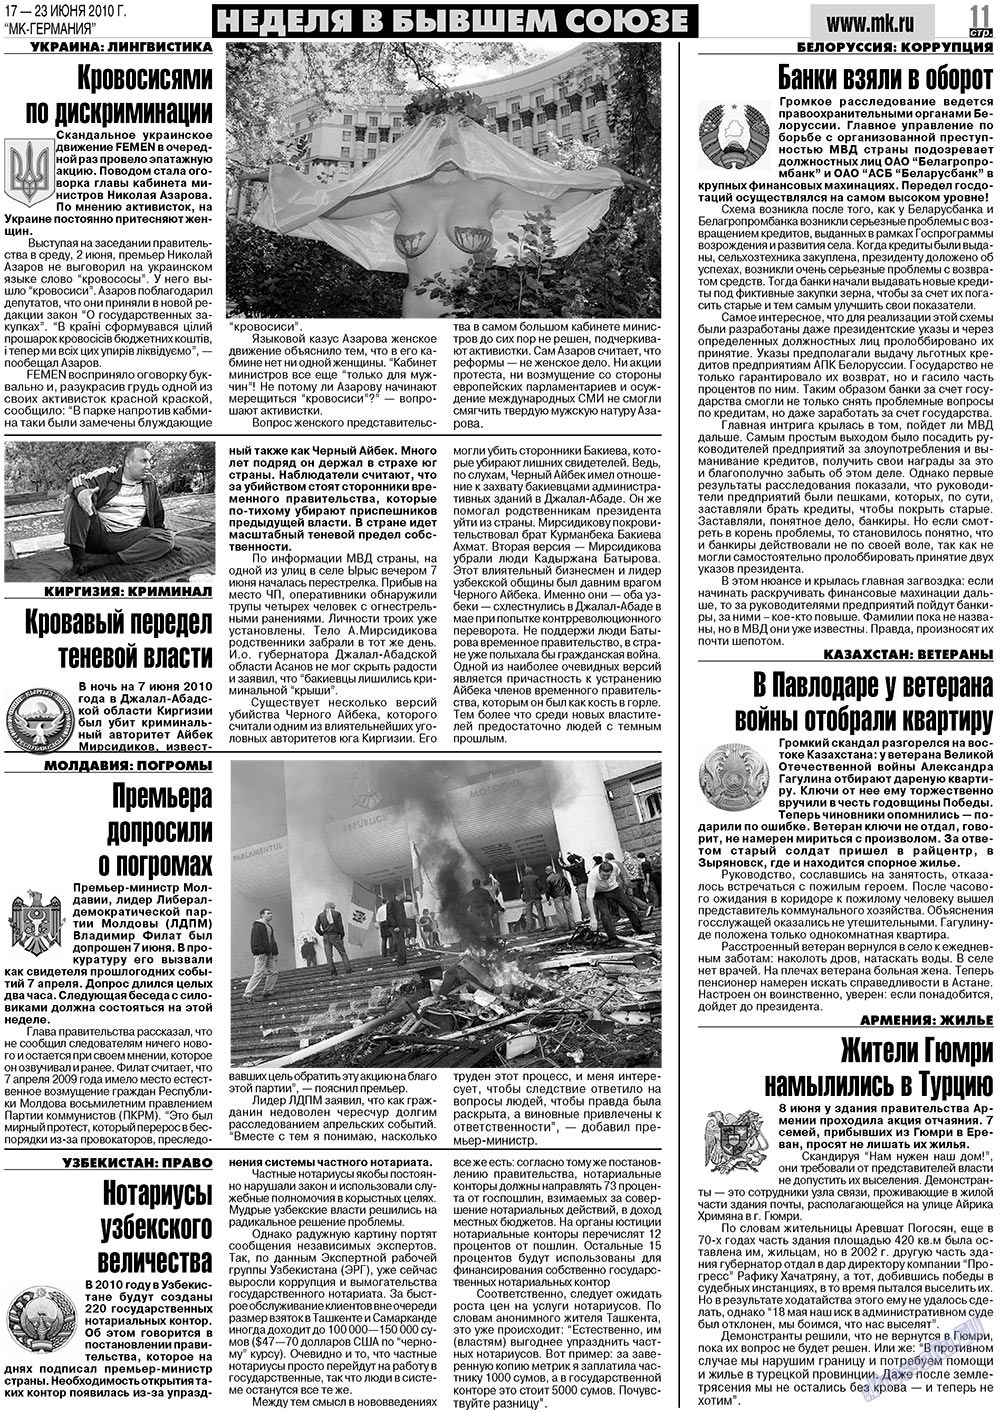 МК-Германия, газета. 2010 №25 стр.11